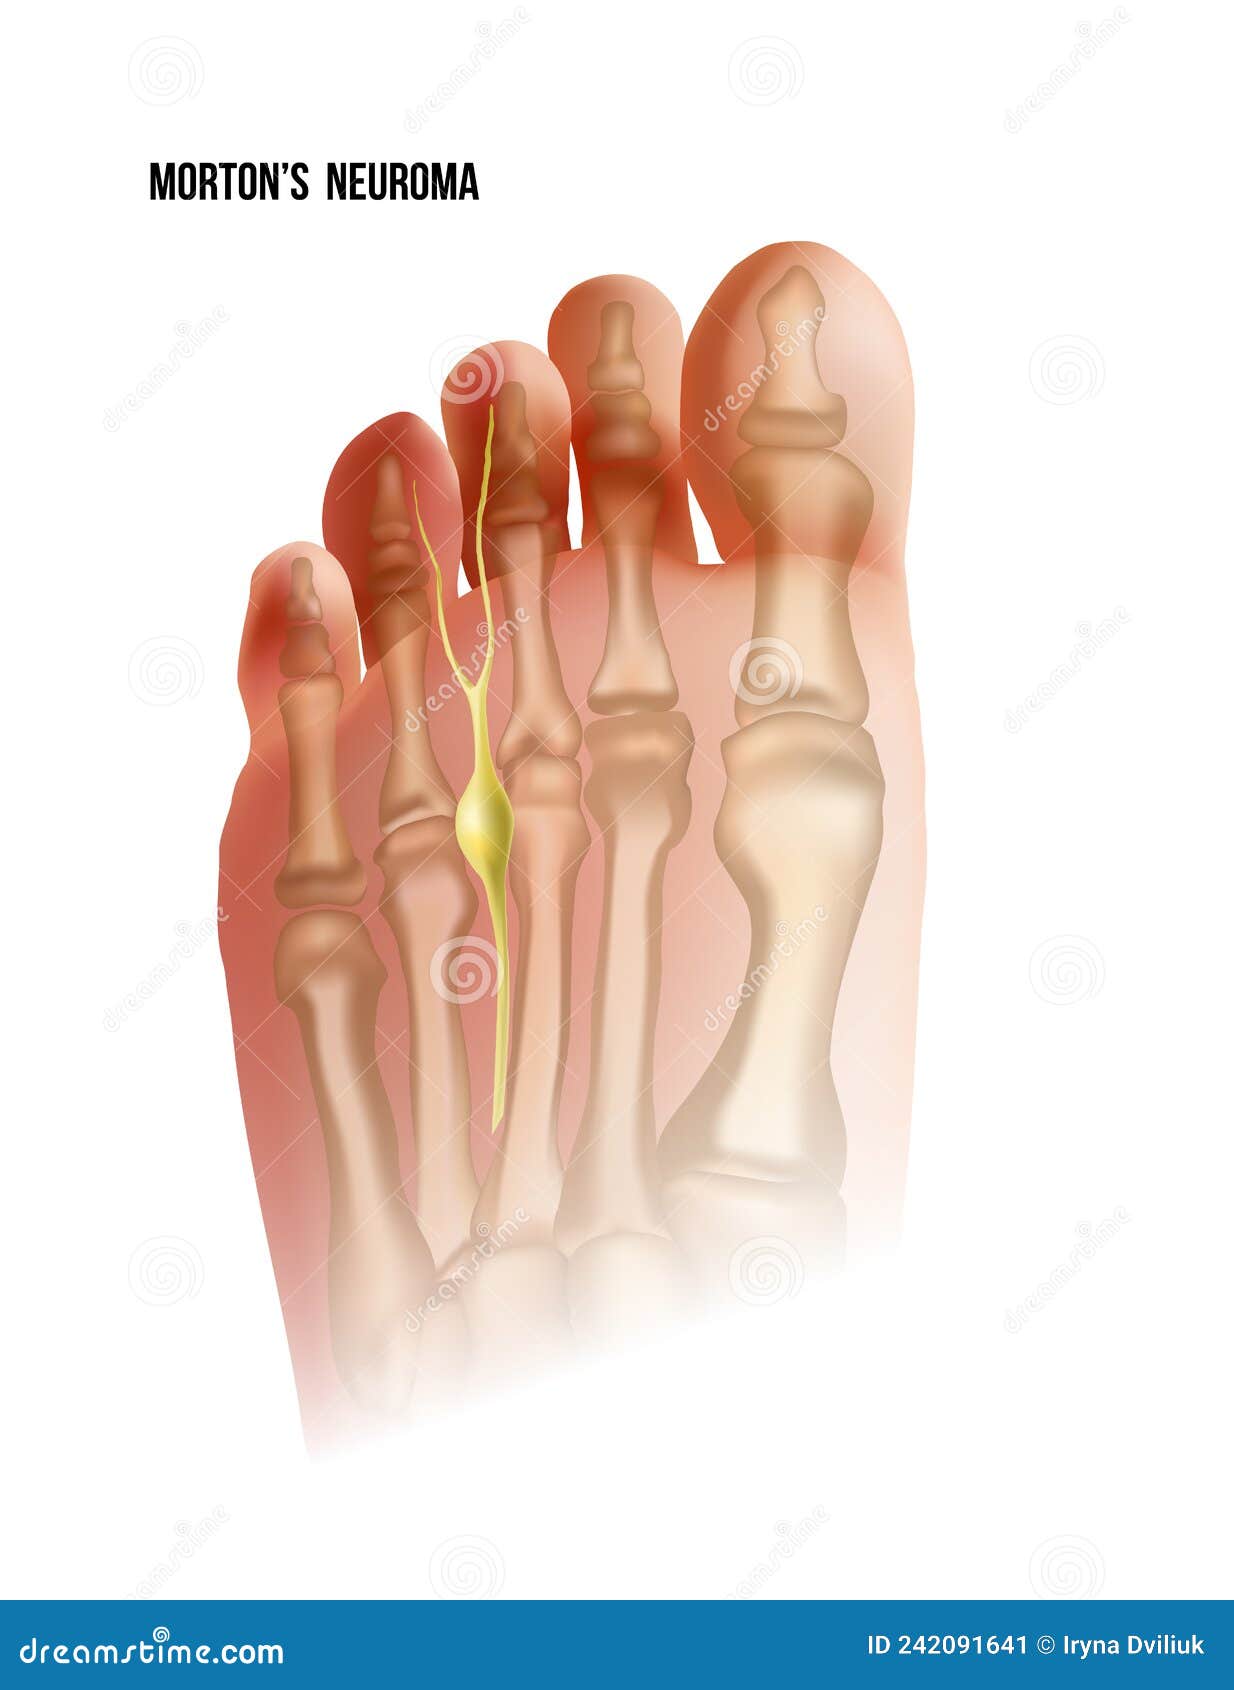 mortons neuroma. foot pain strain bottom view. realistic anatomy 